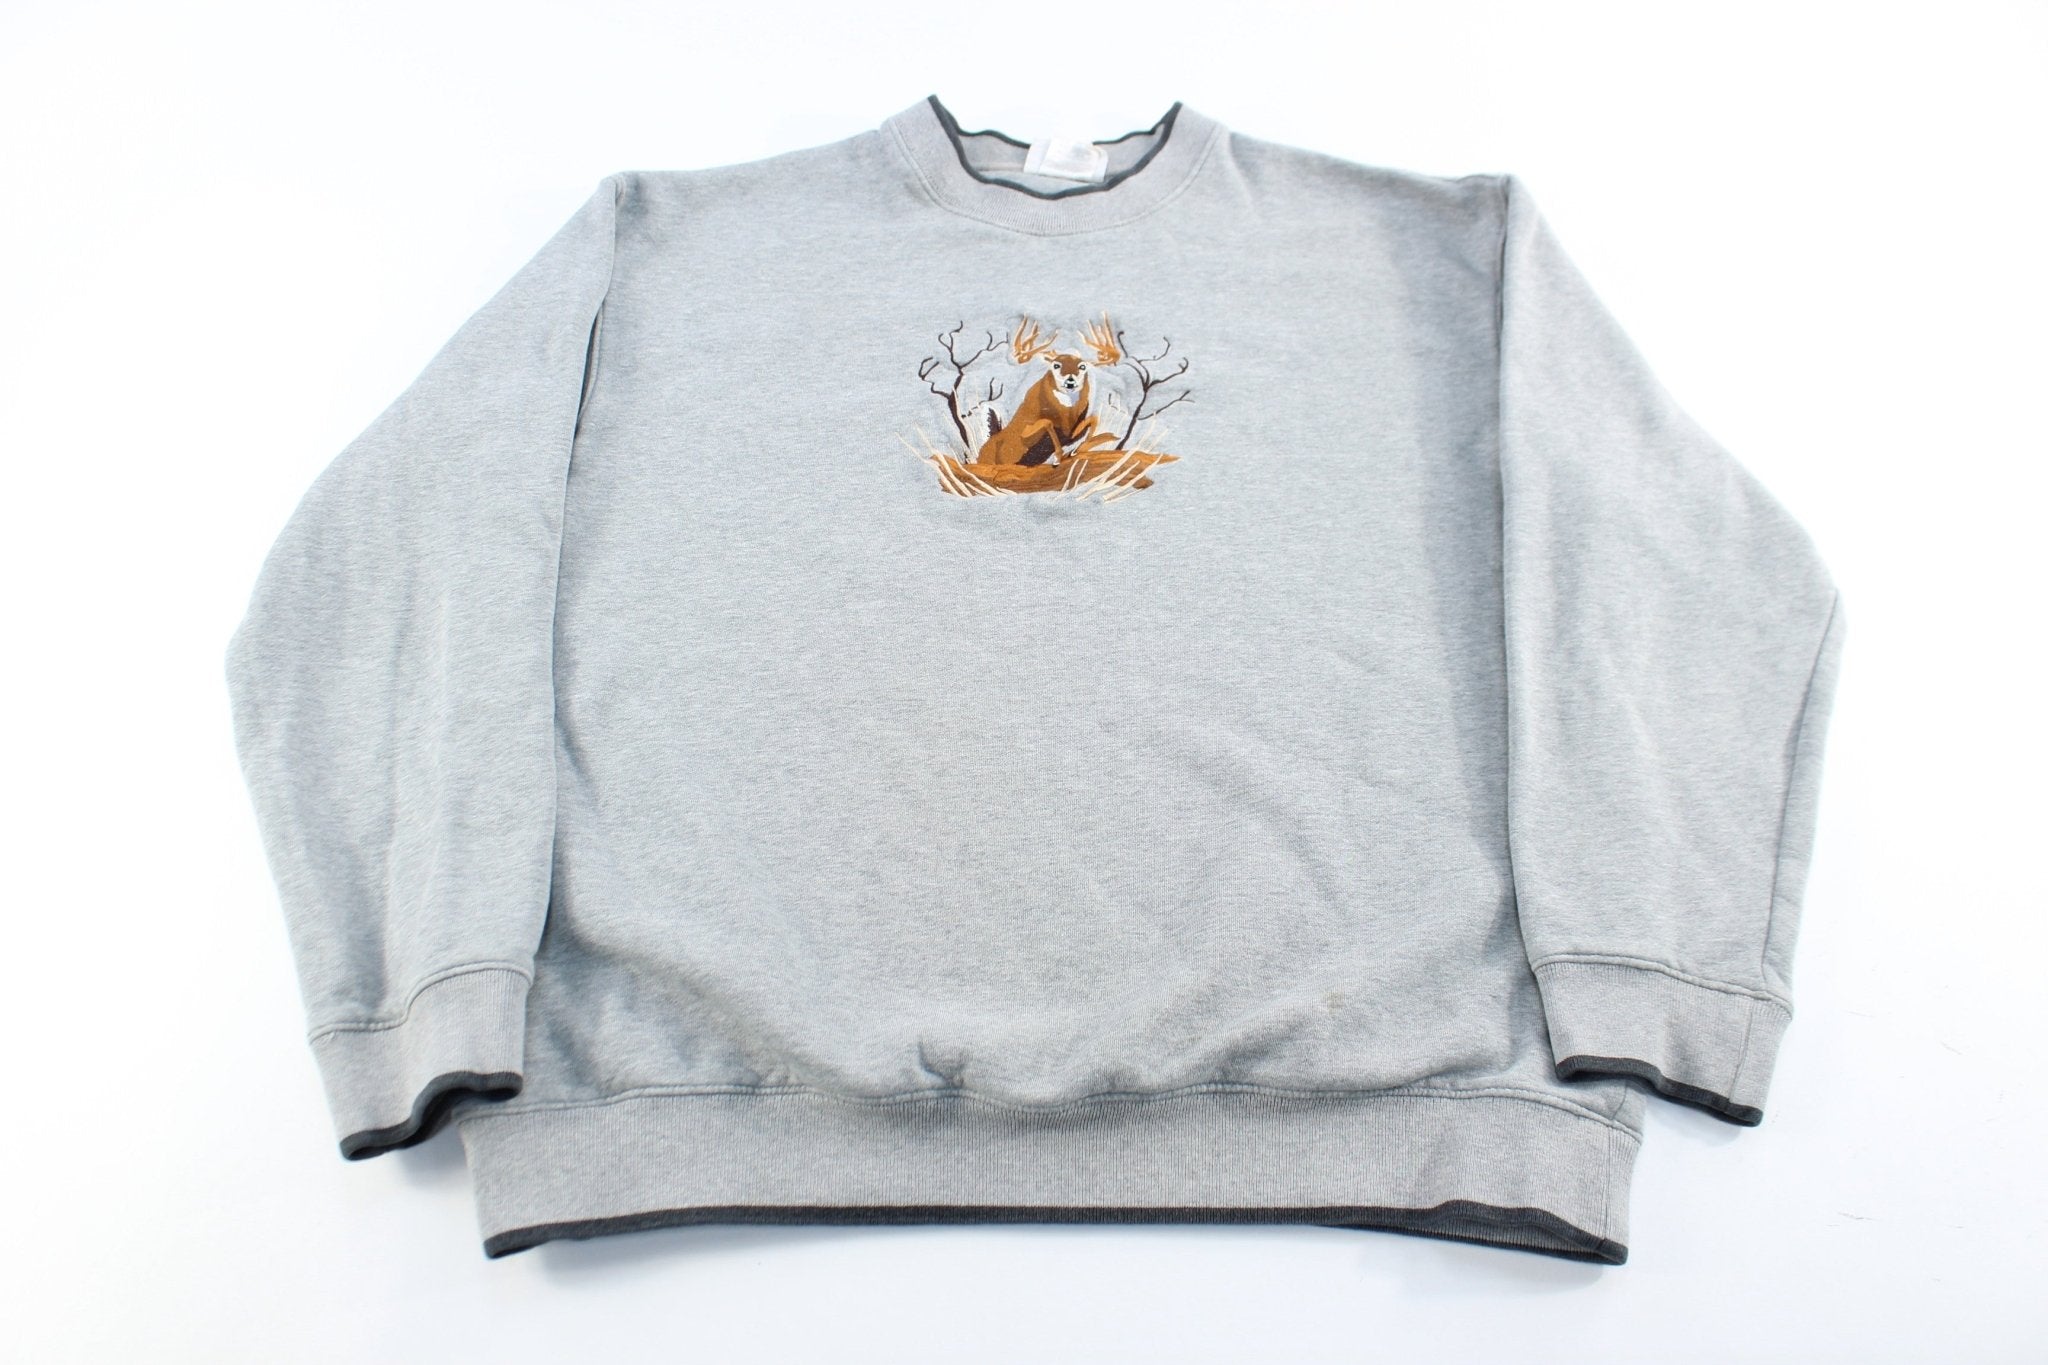 Deer Embroidered Sweatshirt - ThriftedThreads.com